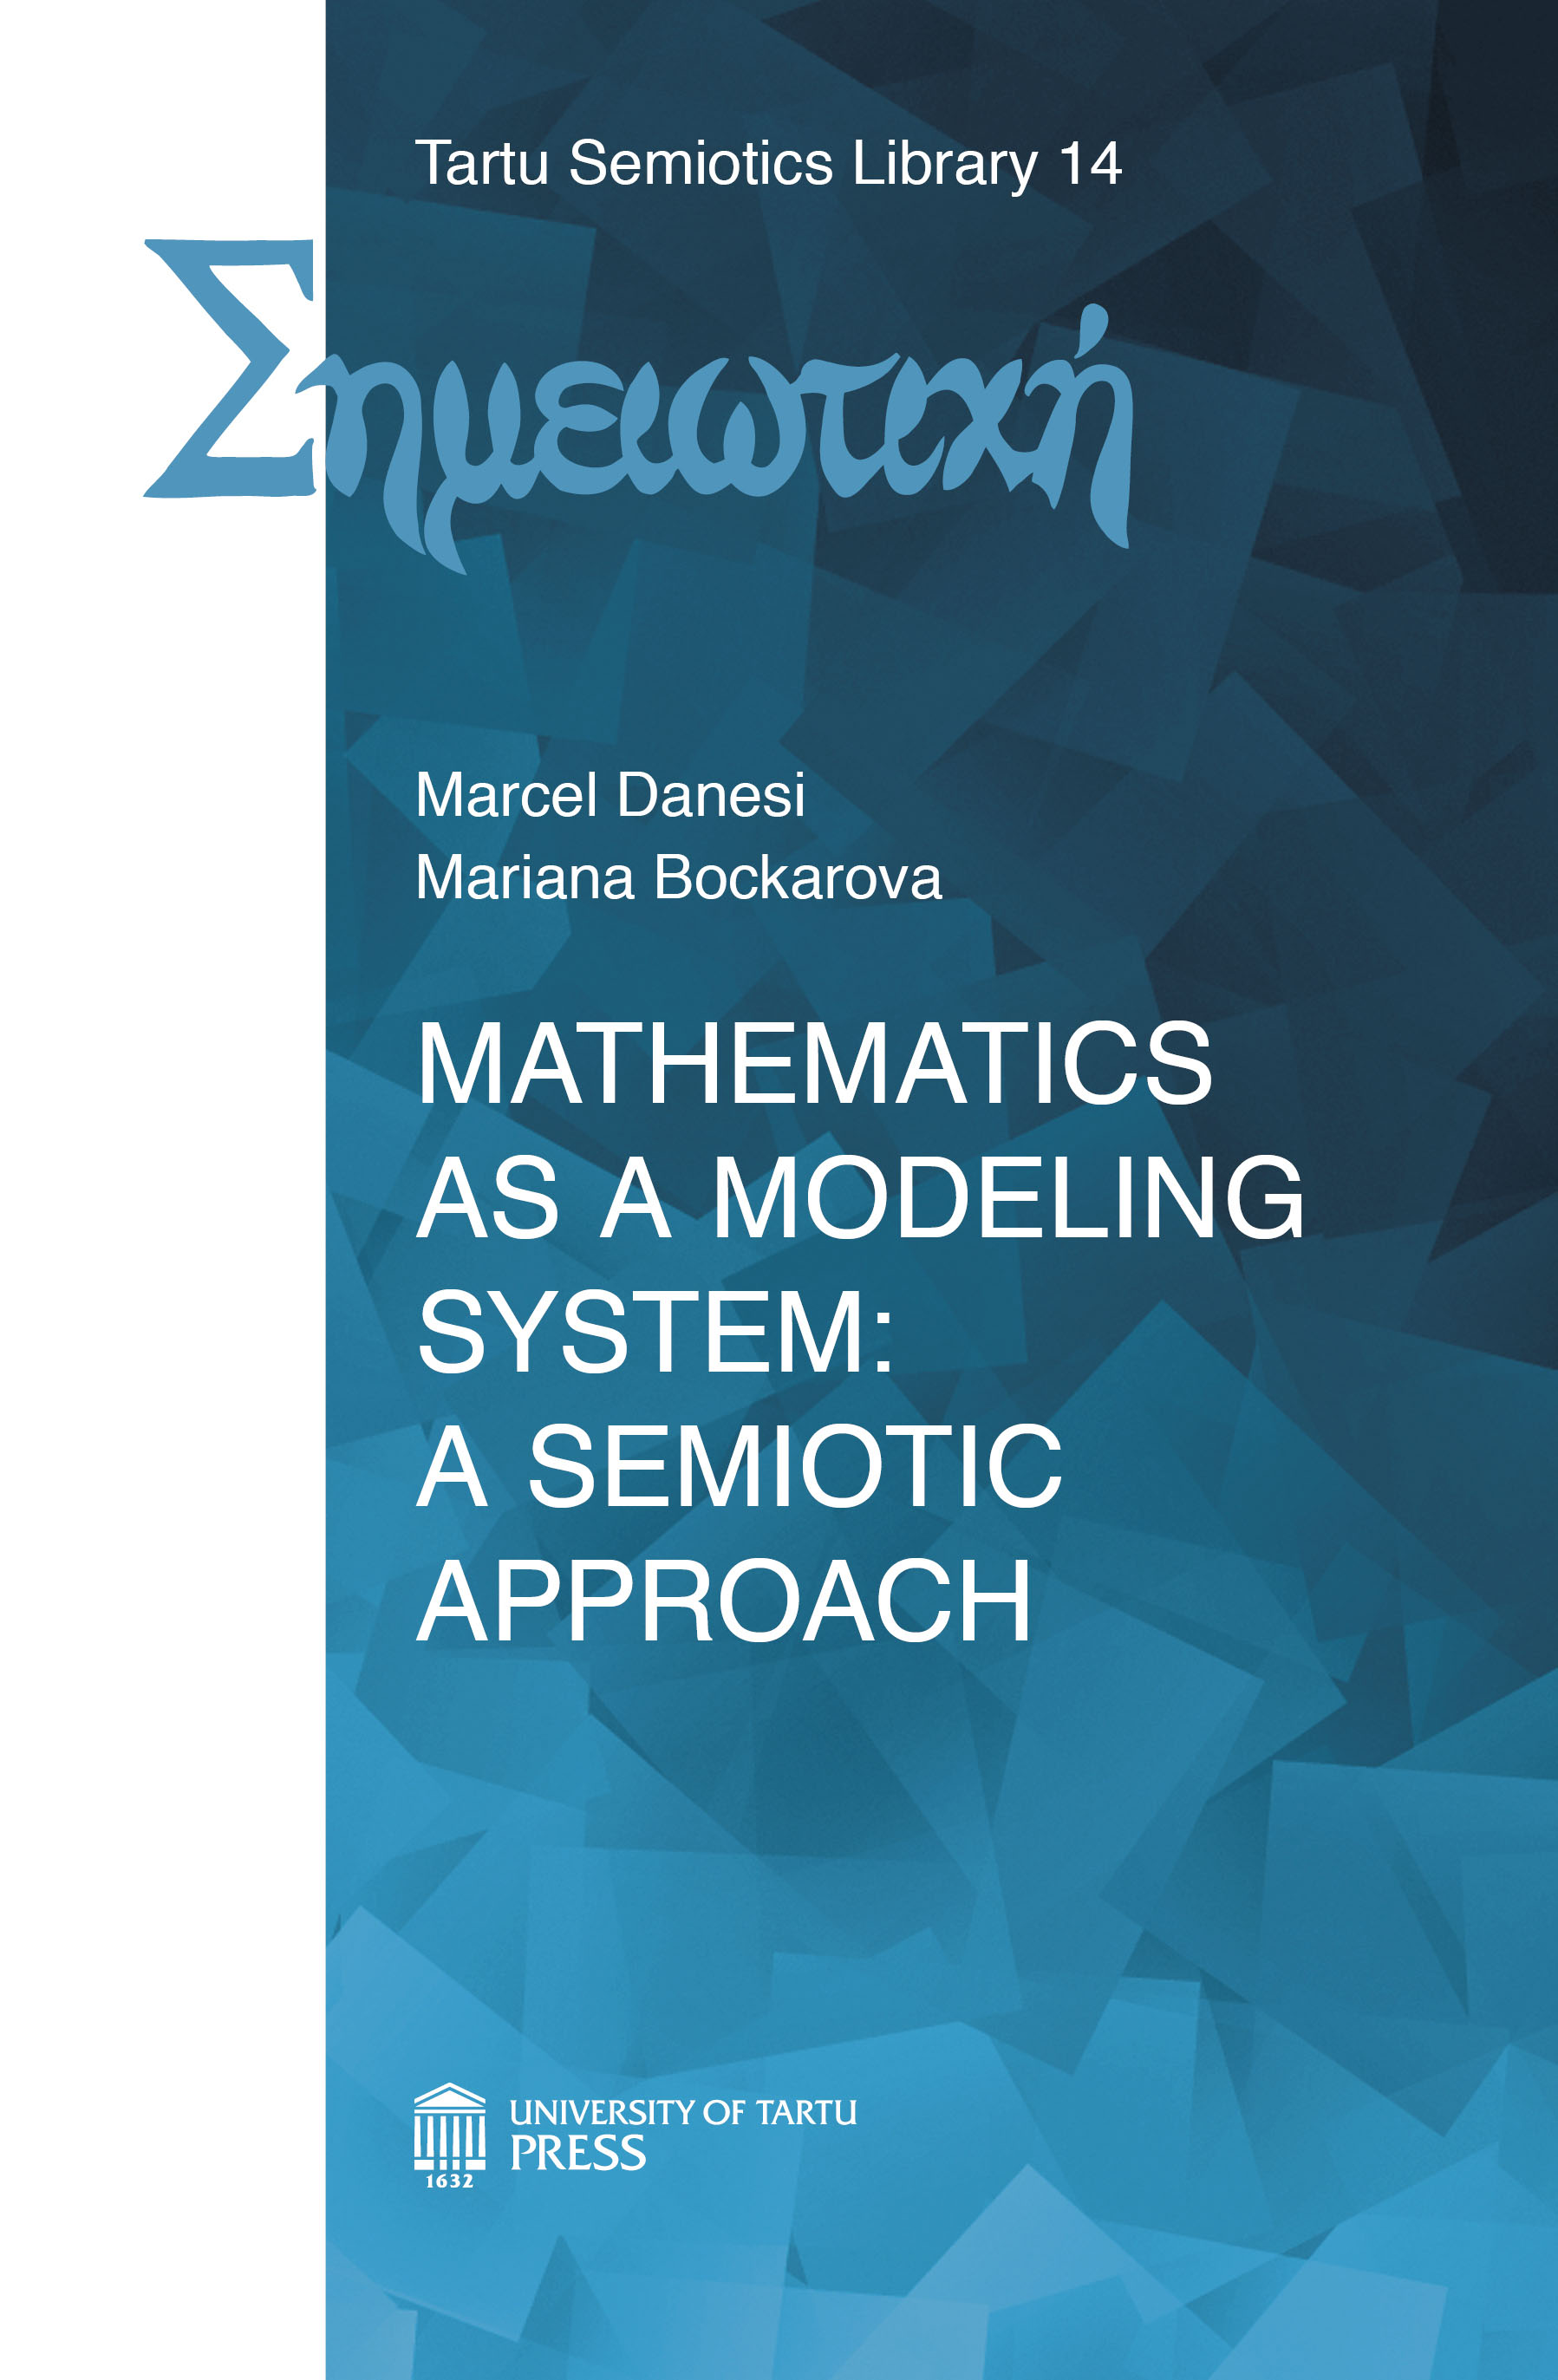 Mathematics, semiotics, and modeling systems theory